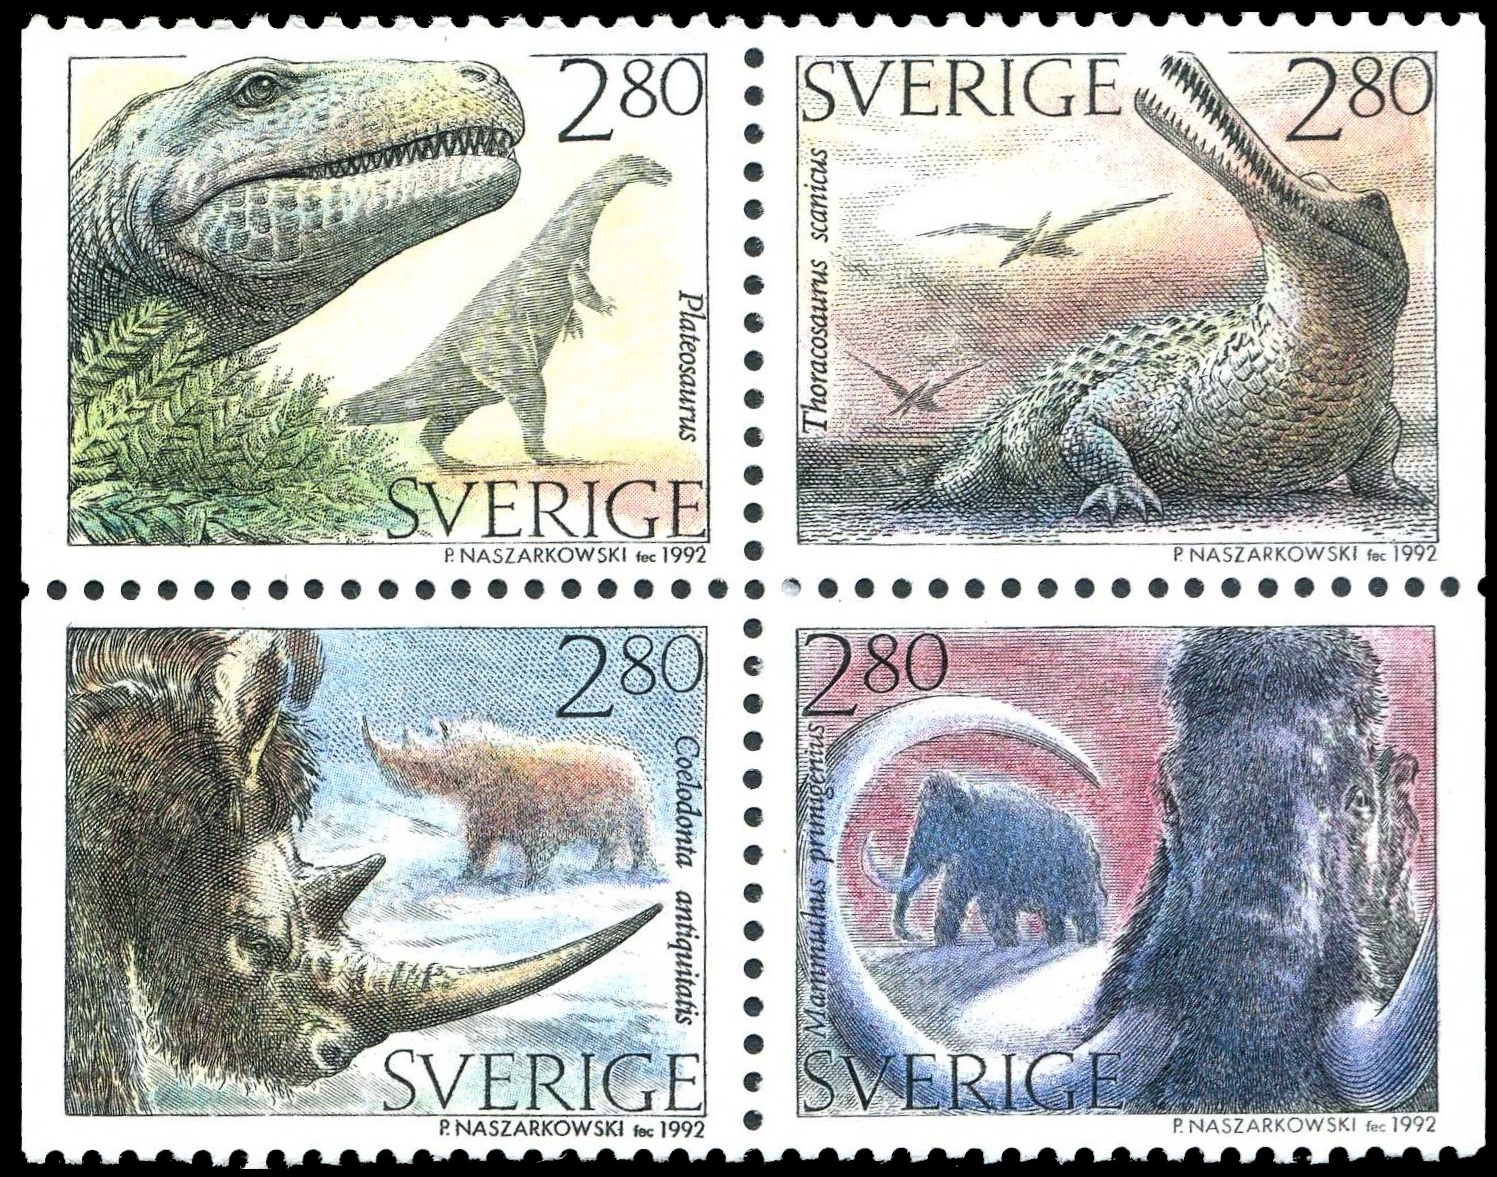 Prehistoric animals on stamps of Sweden